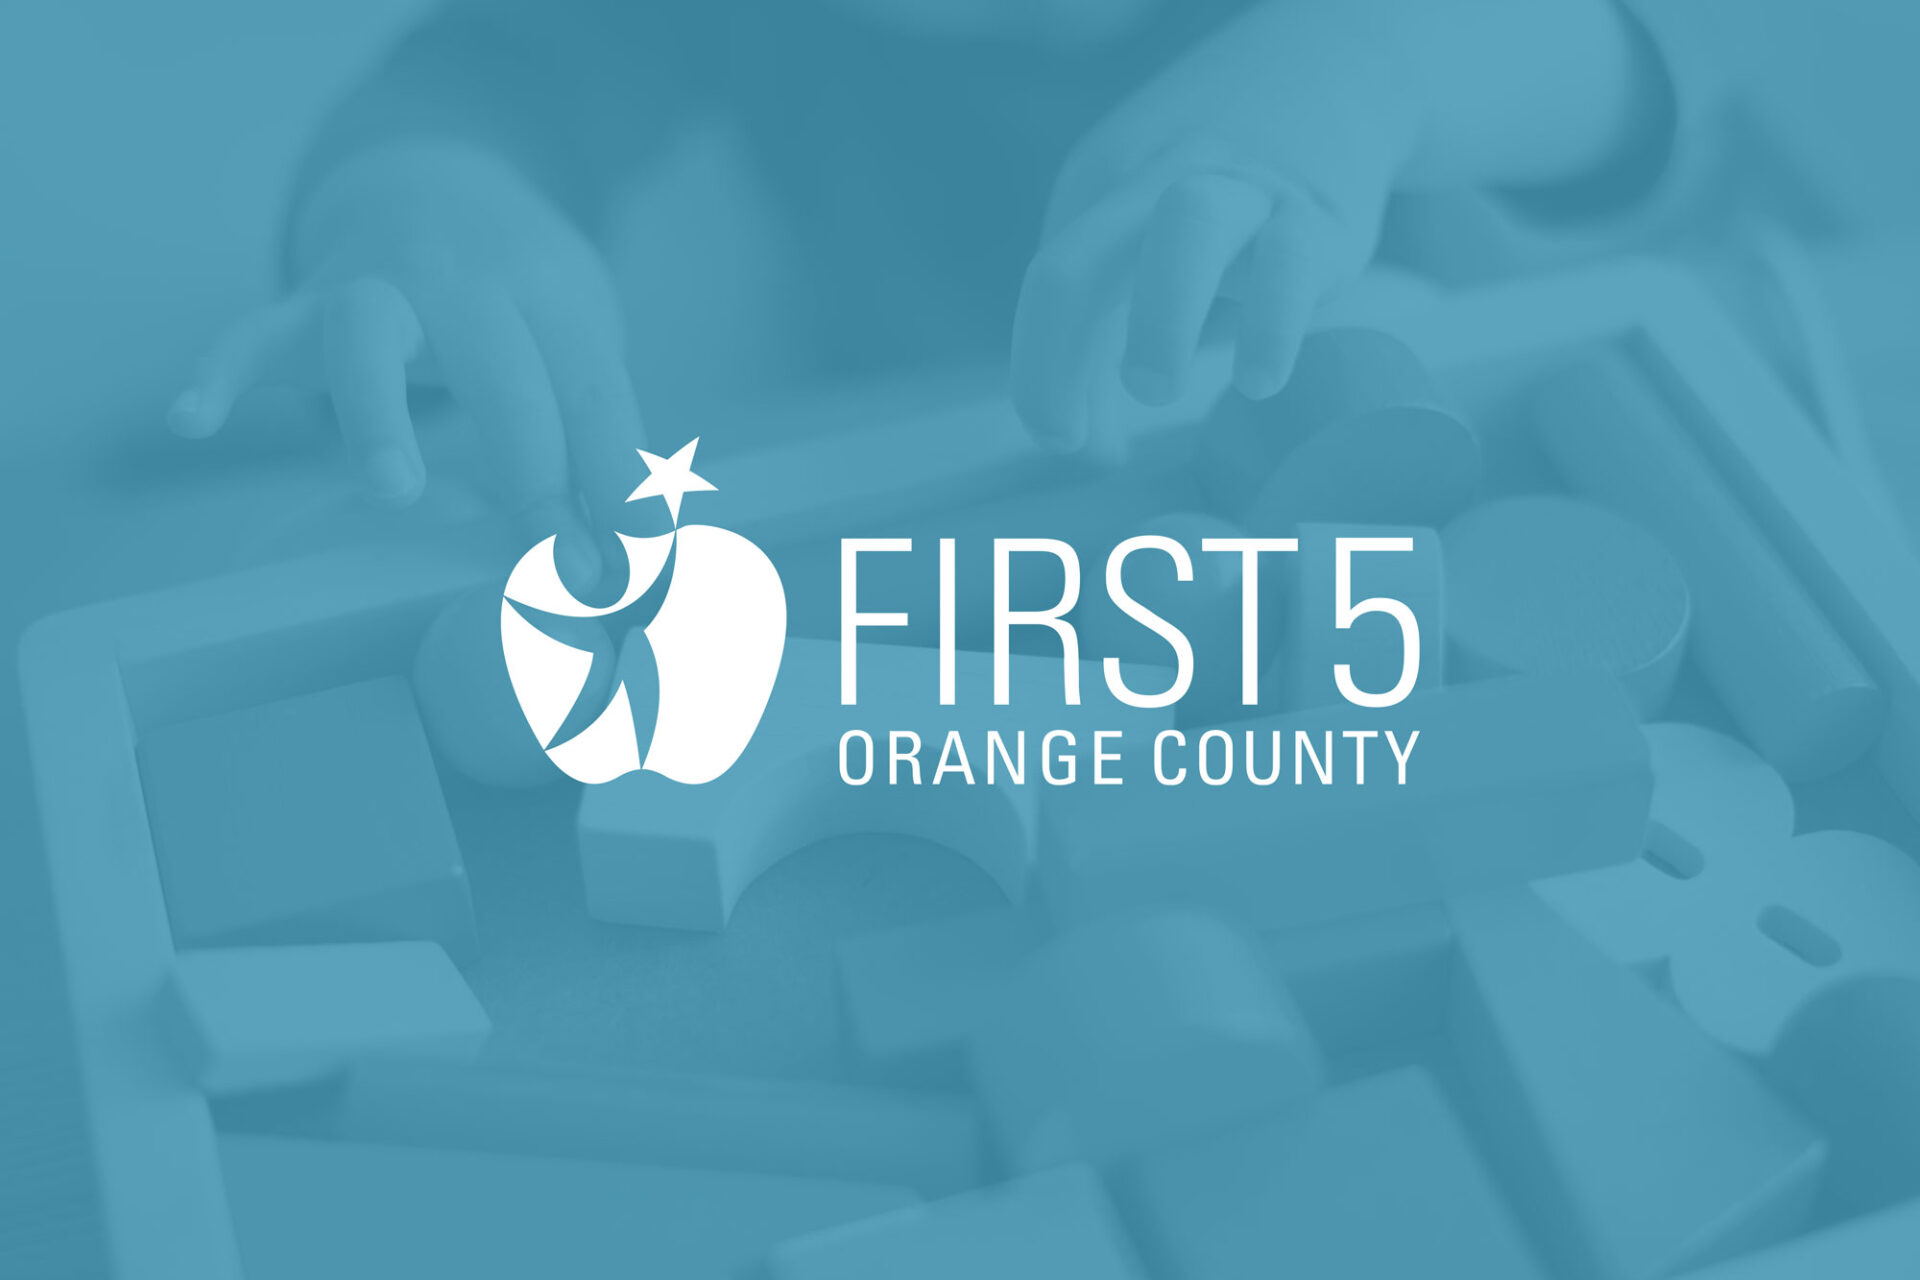 First 5 Orange County